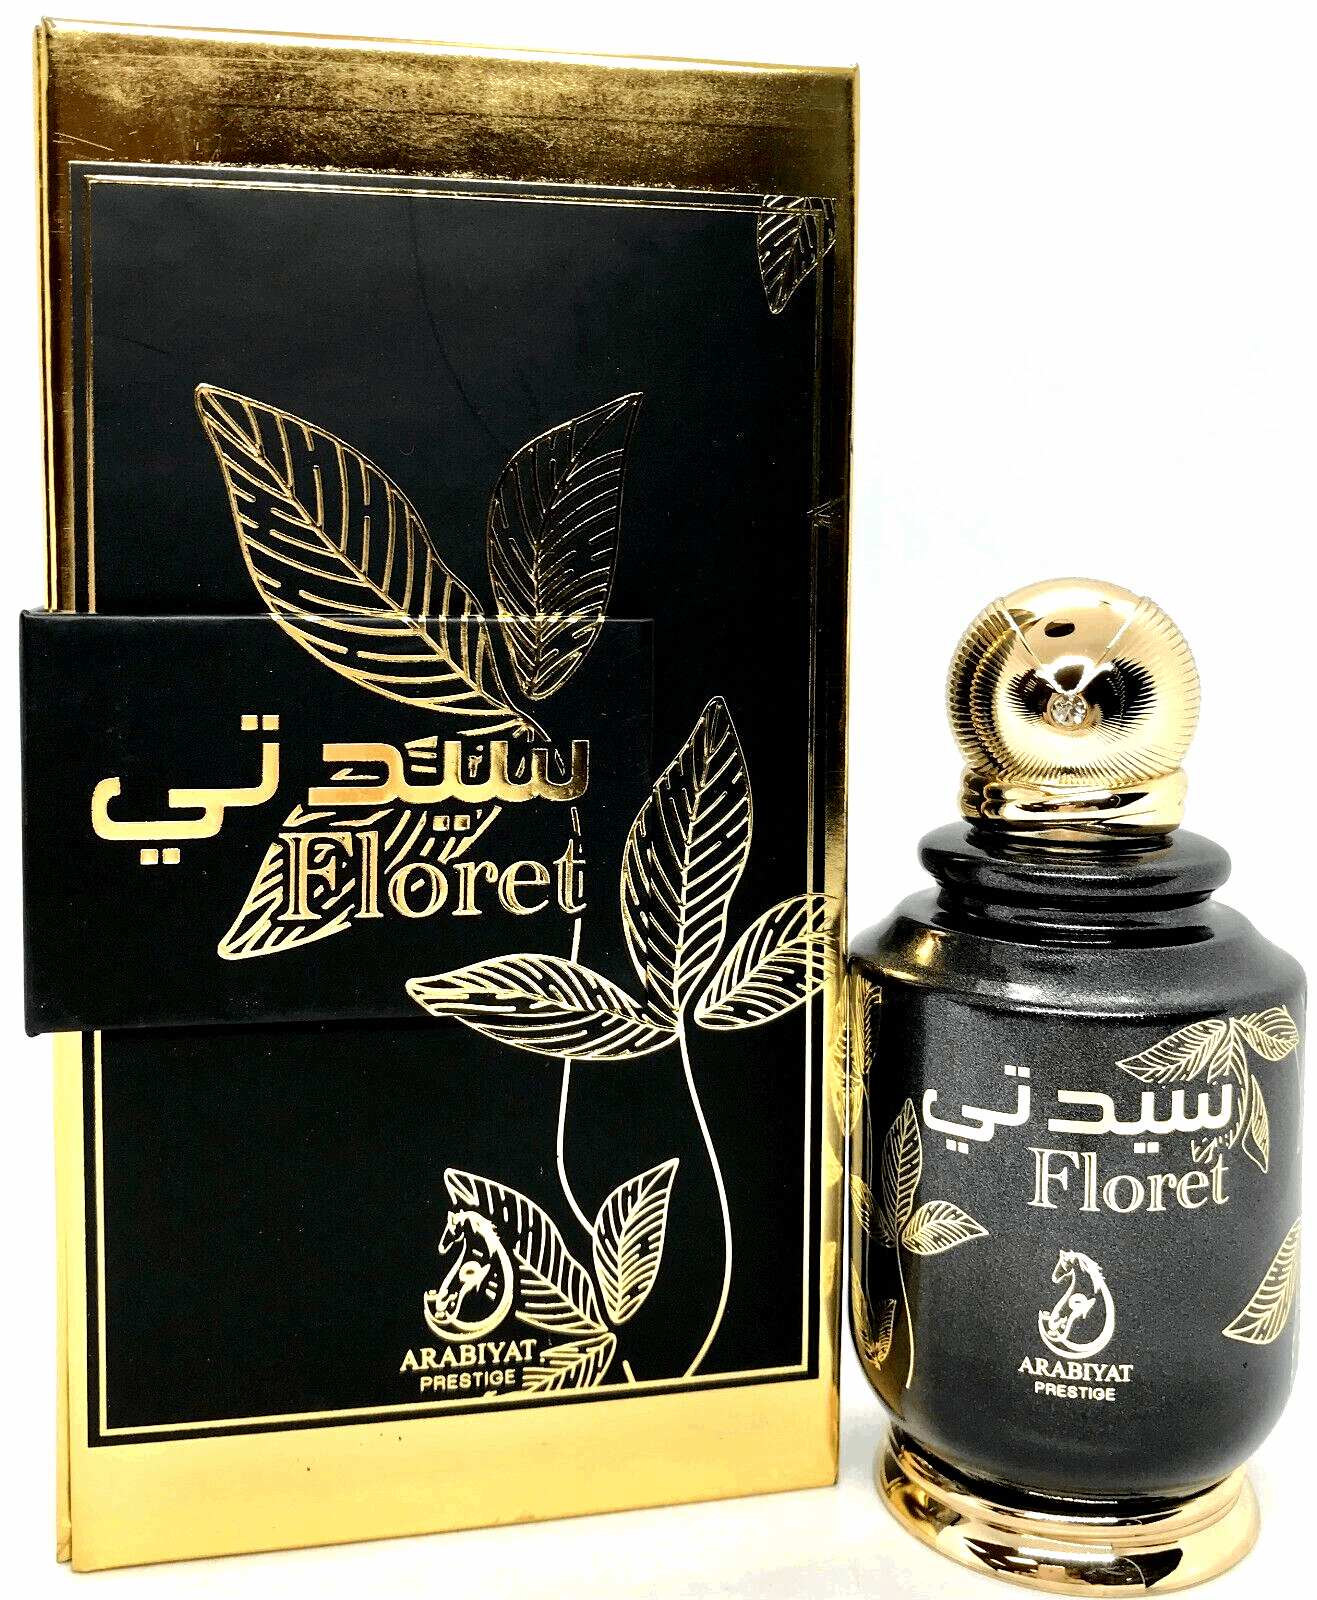 Sayidati Floret 100ml - Arabiyat Prestige Eau De Parfum